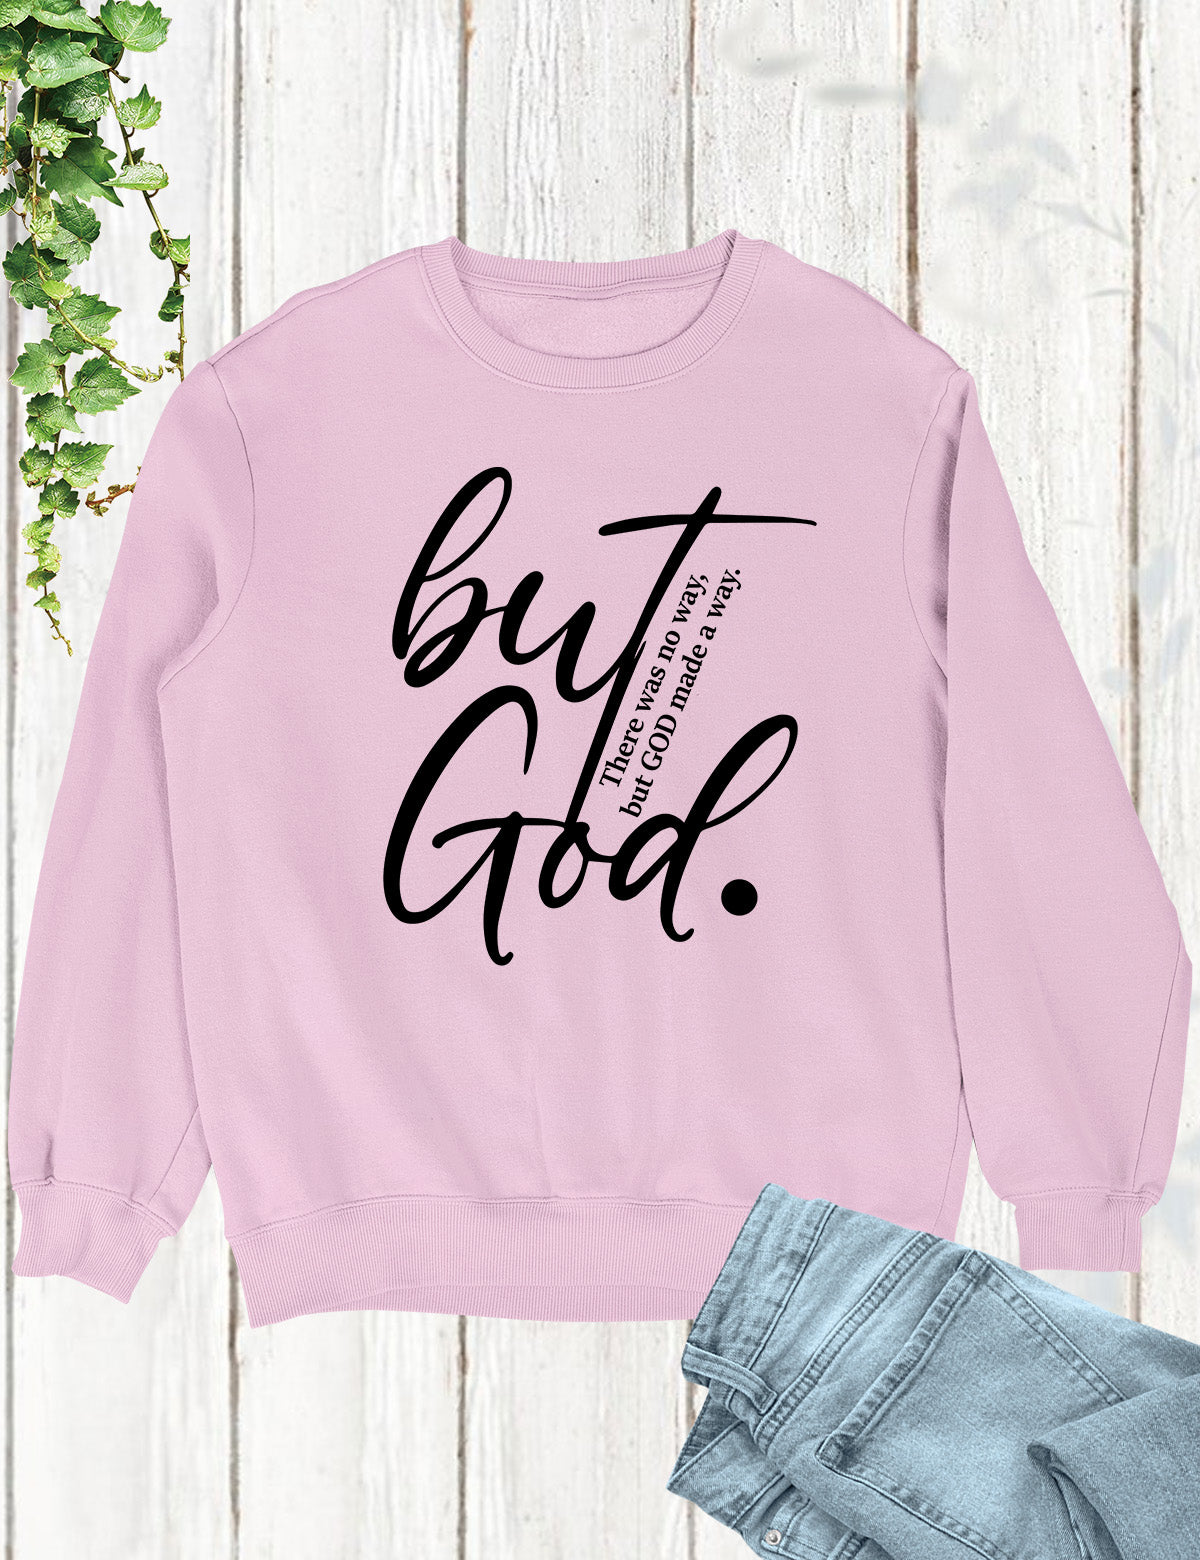 But God Bible Verse Sweatshirts